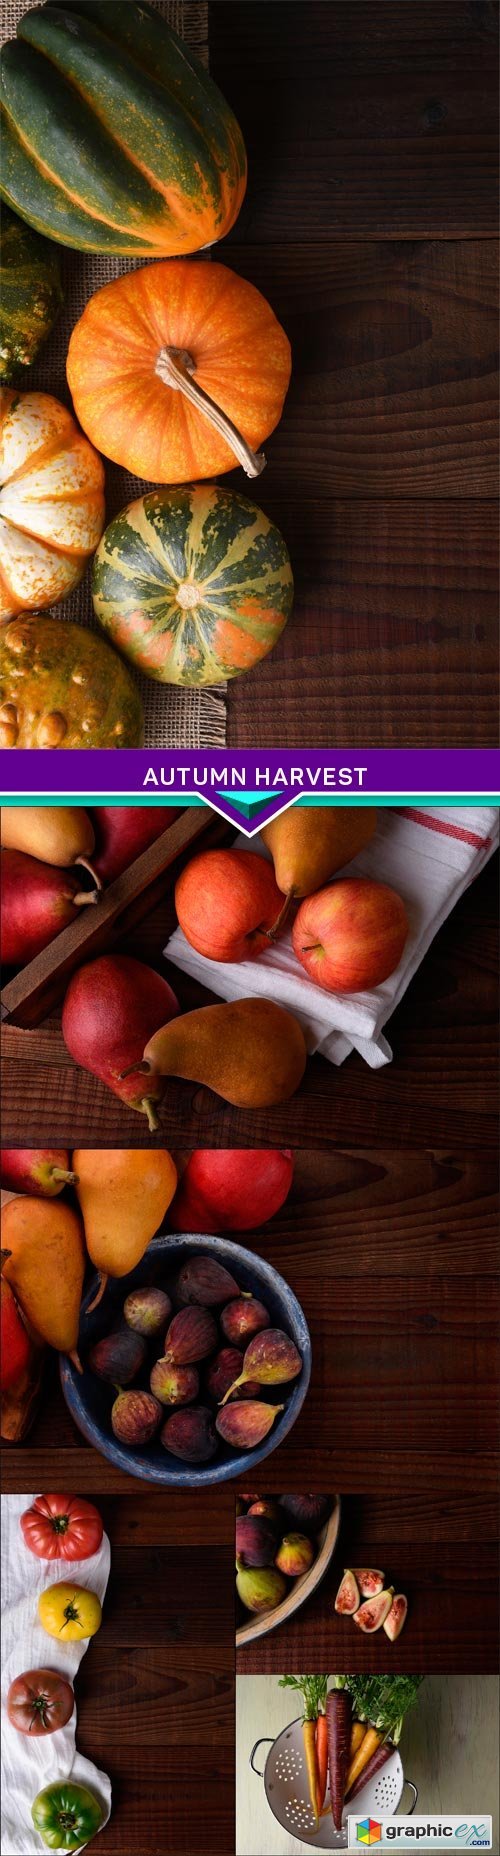 Autumn harvest 6X JPEG